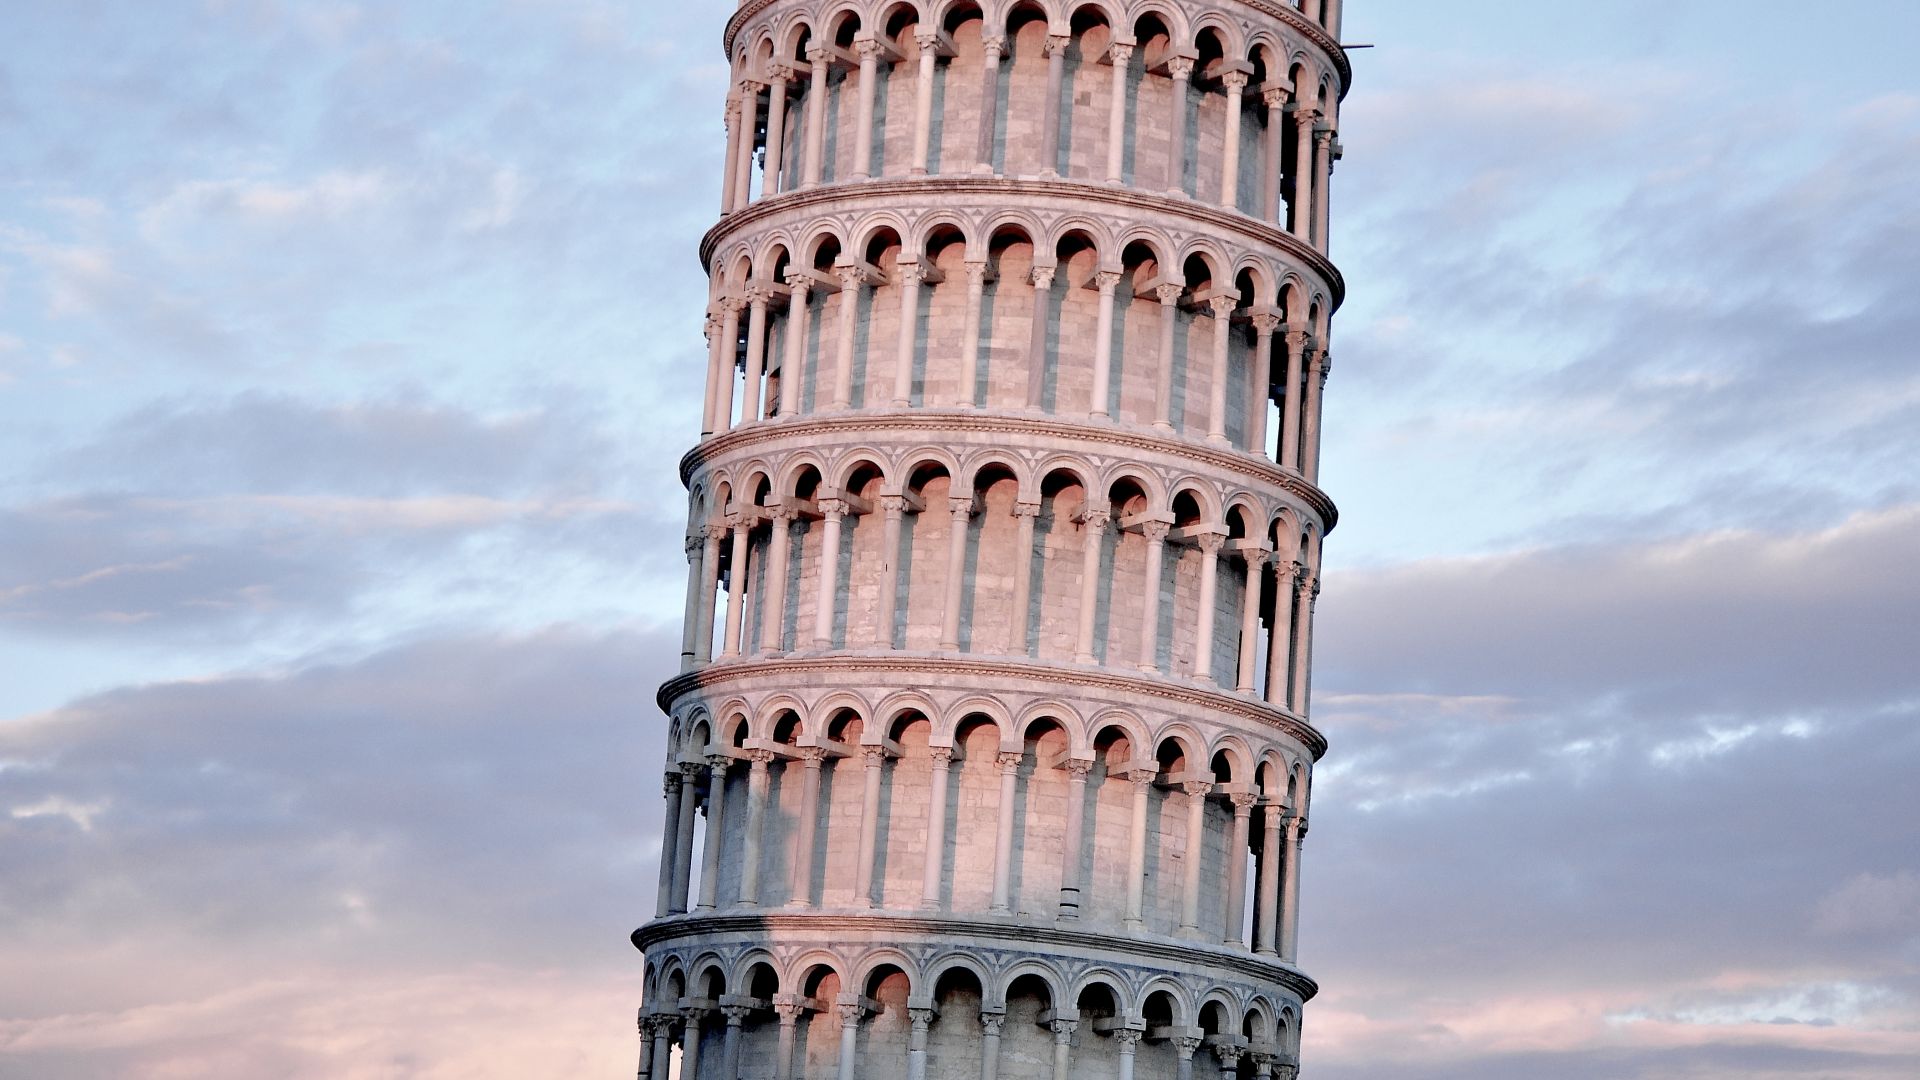 Пизанская башня, Пиза, Италия, путешествие, туризм, Tower of Pisa, Pisa, Italy, Europe, travel, tourism, Leaning Tower of Pisa (horizontal)